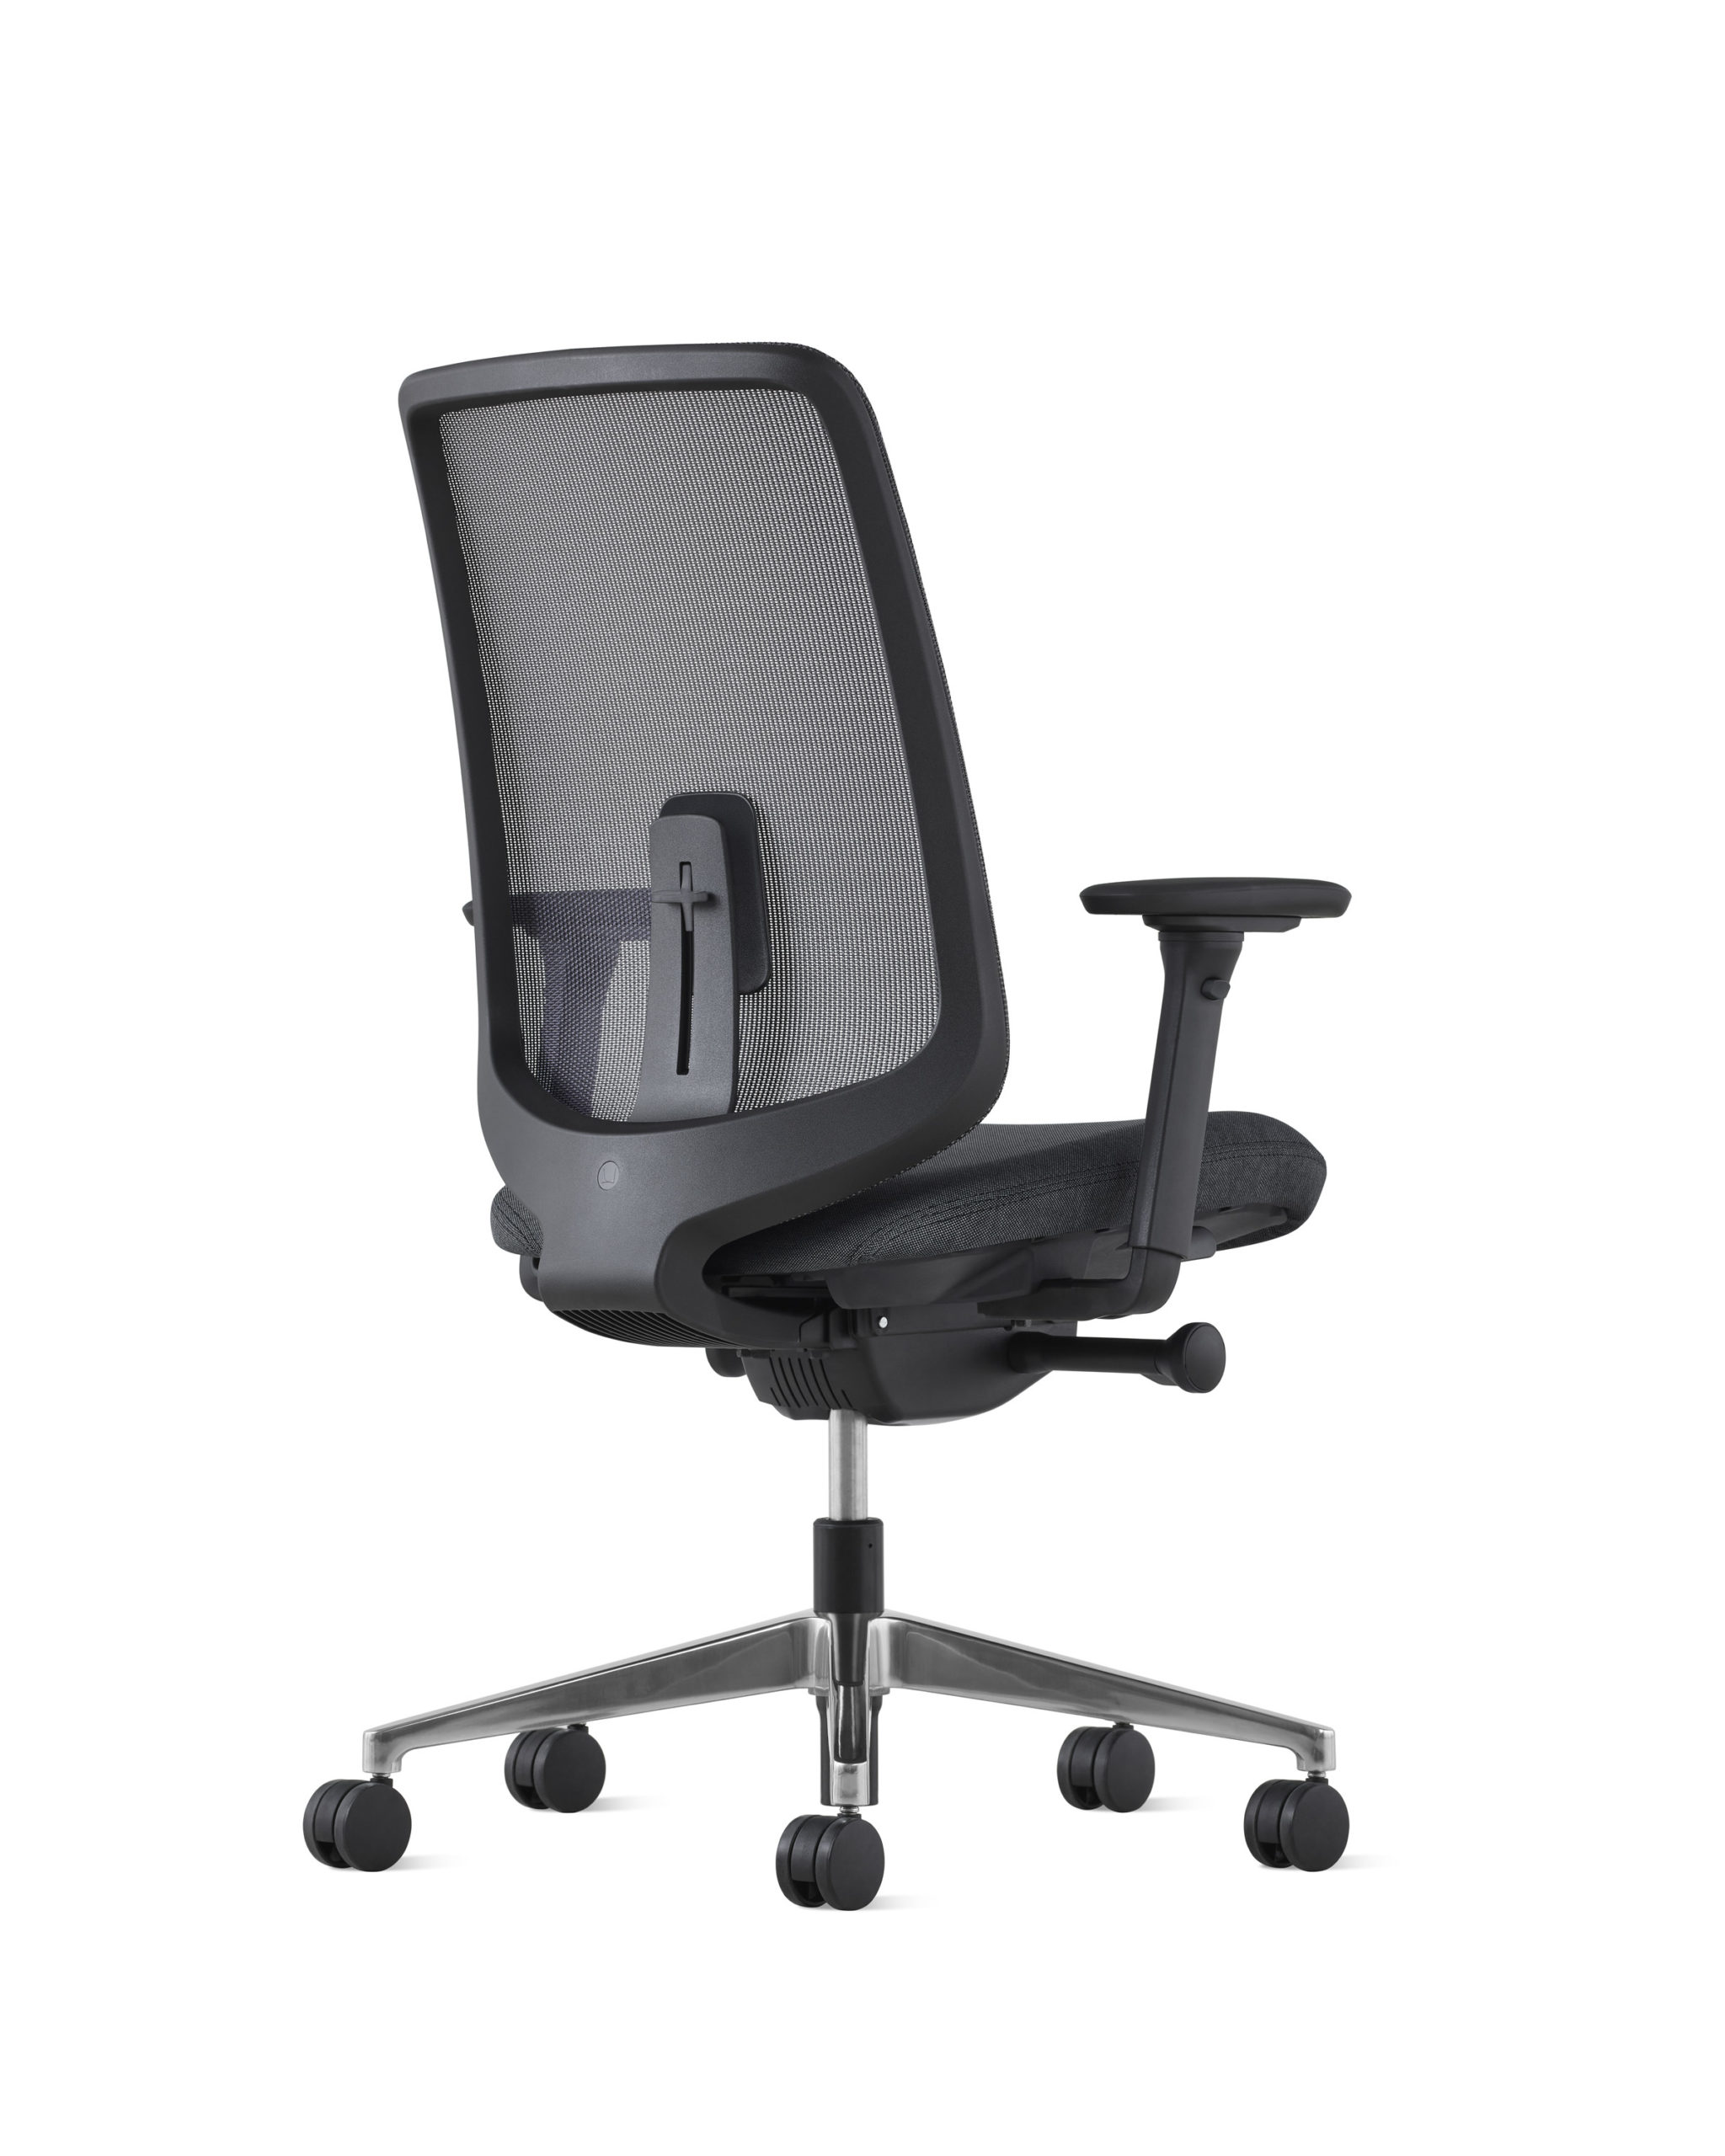 Verus Herman Miller silla ergonomica negra tejido